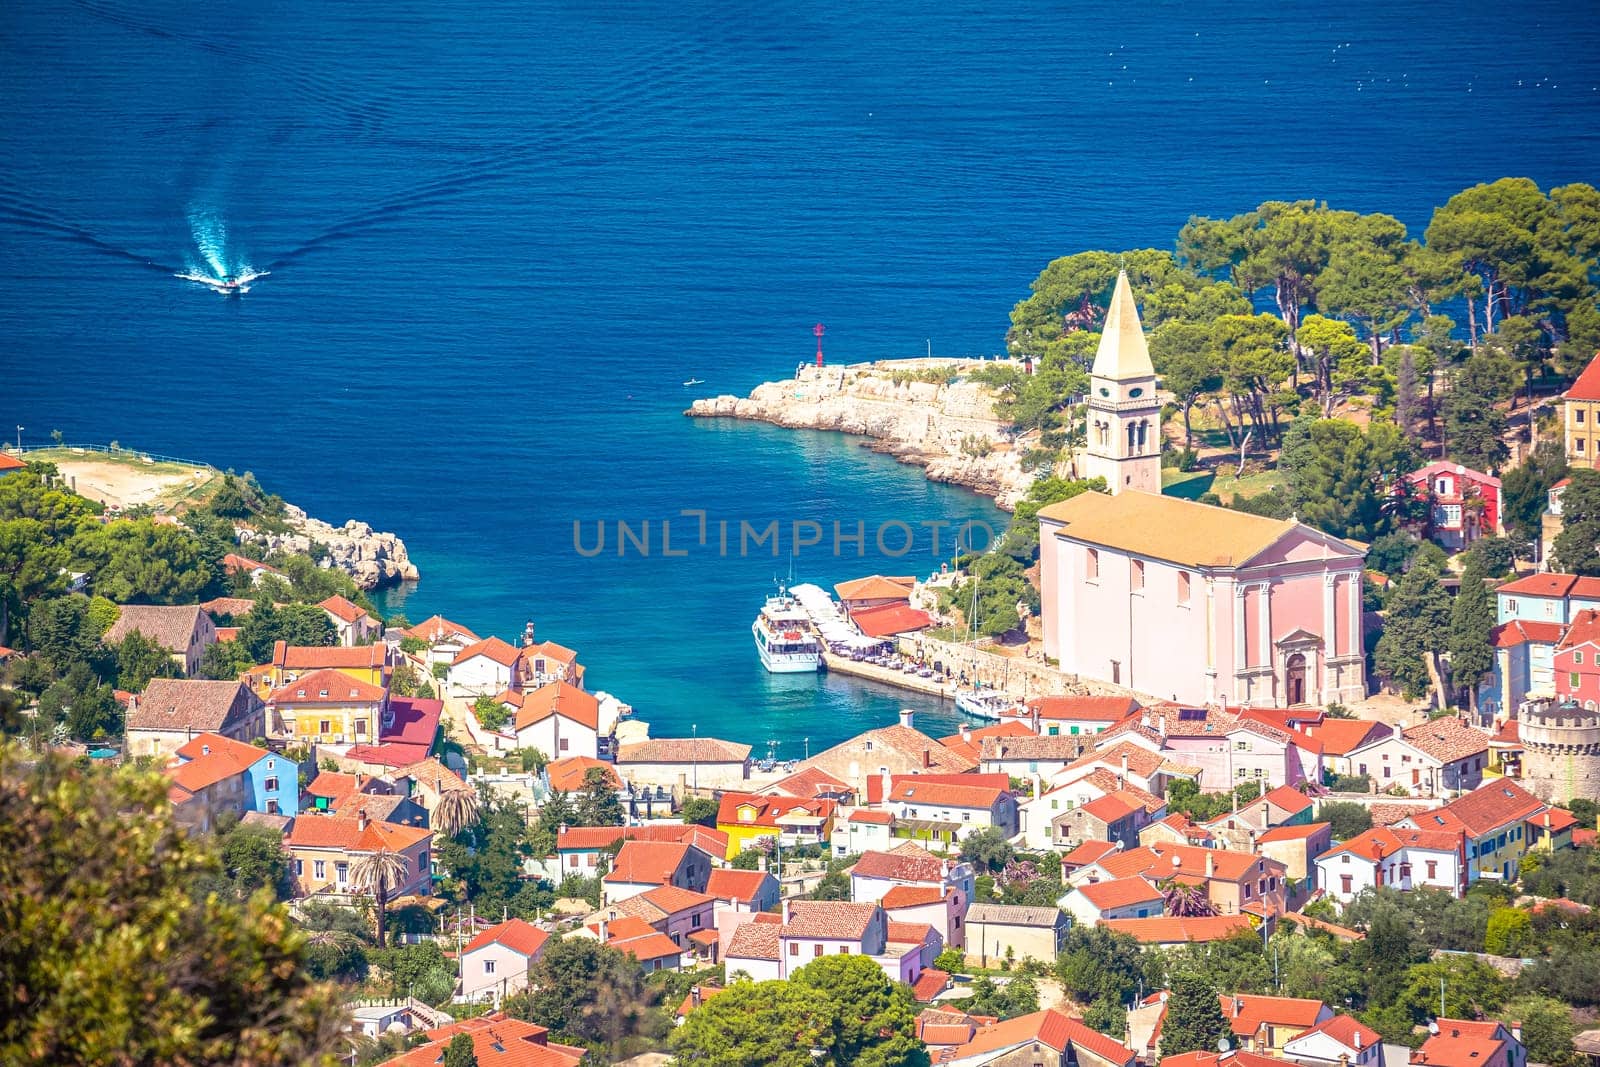 Veli losinj panoramic aerial view, Island of Losinj, archipelago of Croatia